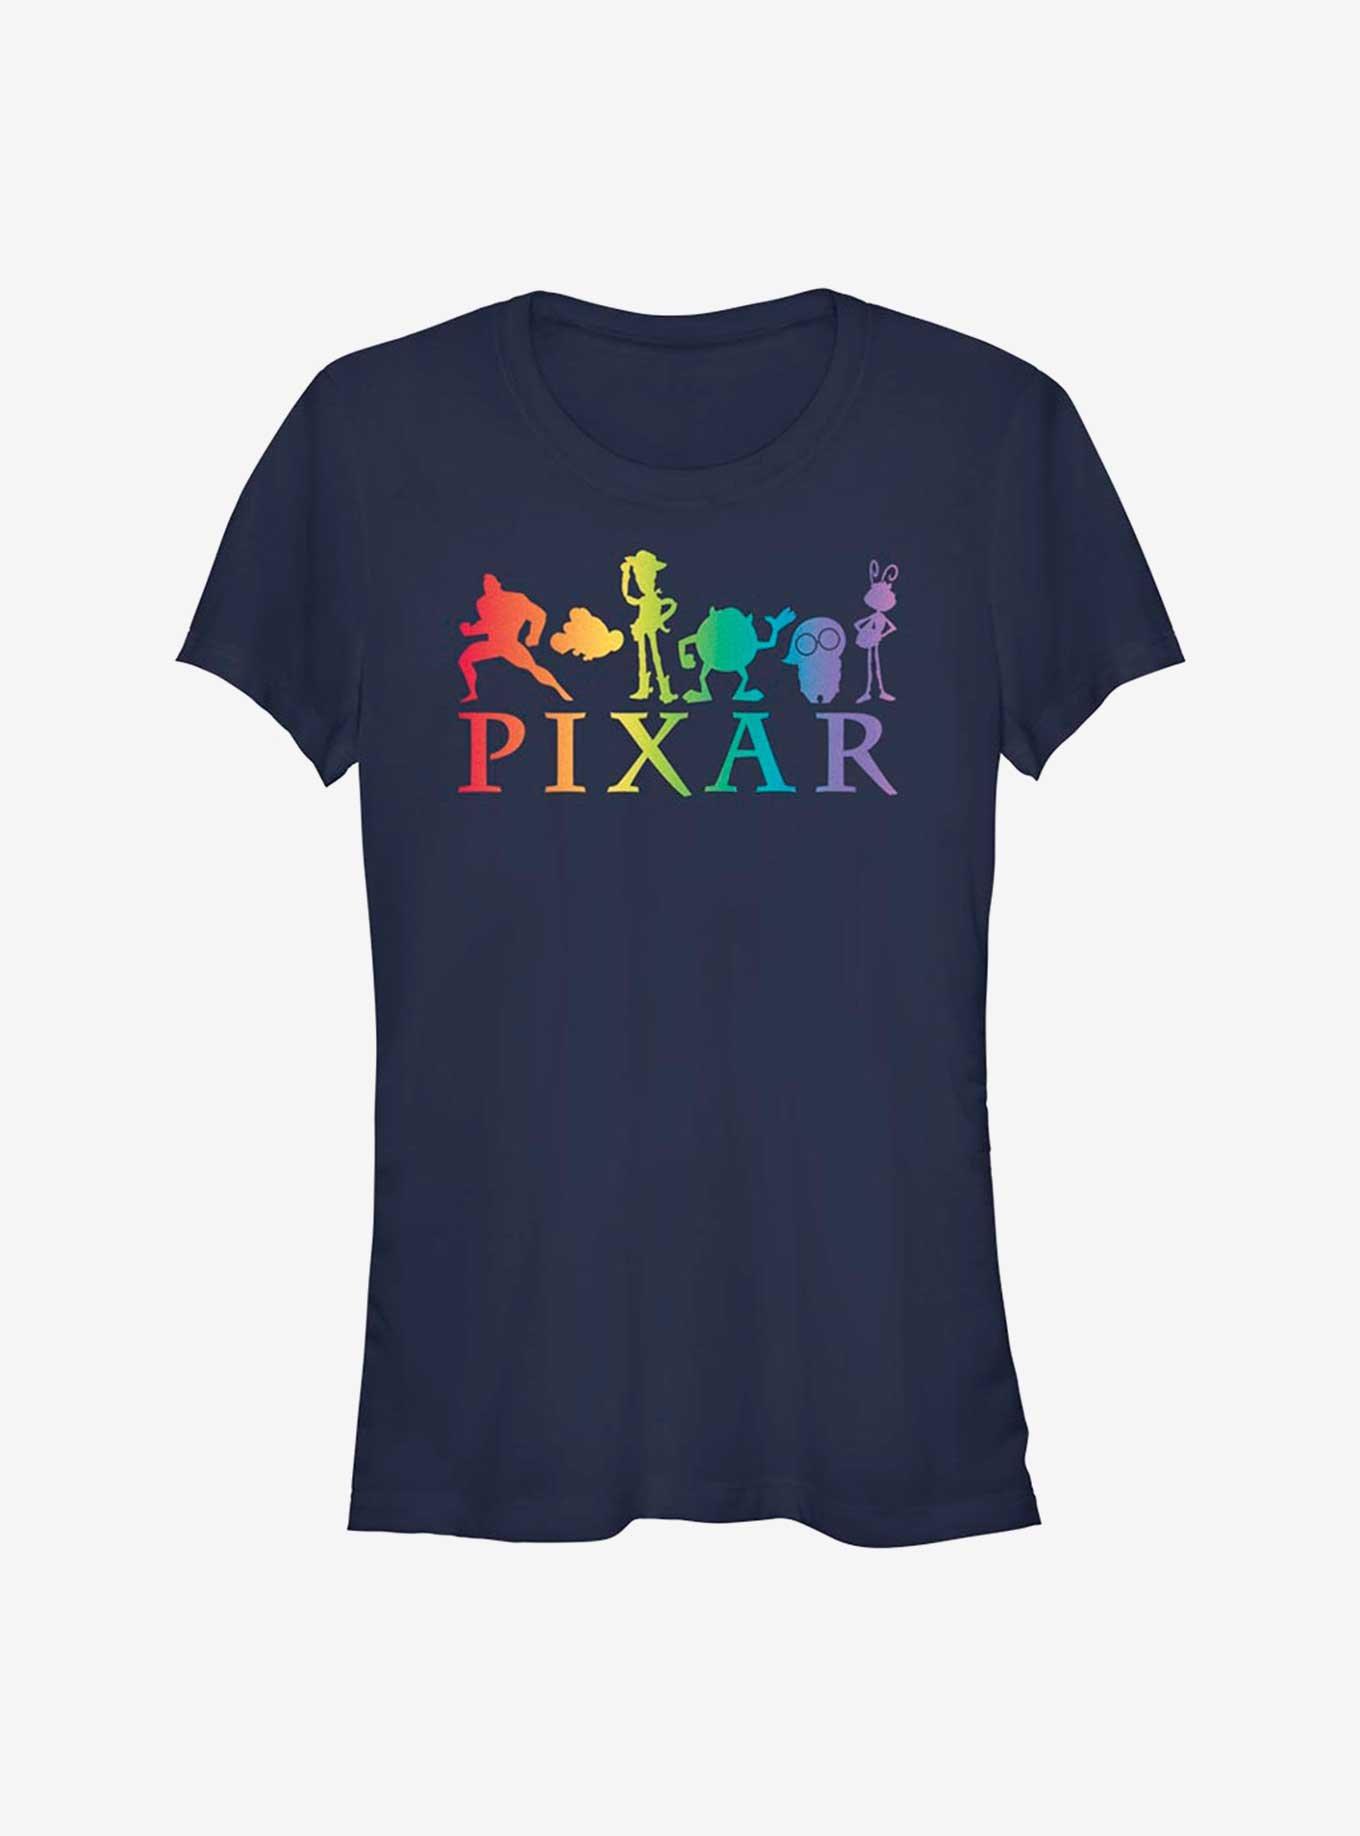 Pixar Lineup Pride T-Shirt, NAVY, hi-res